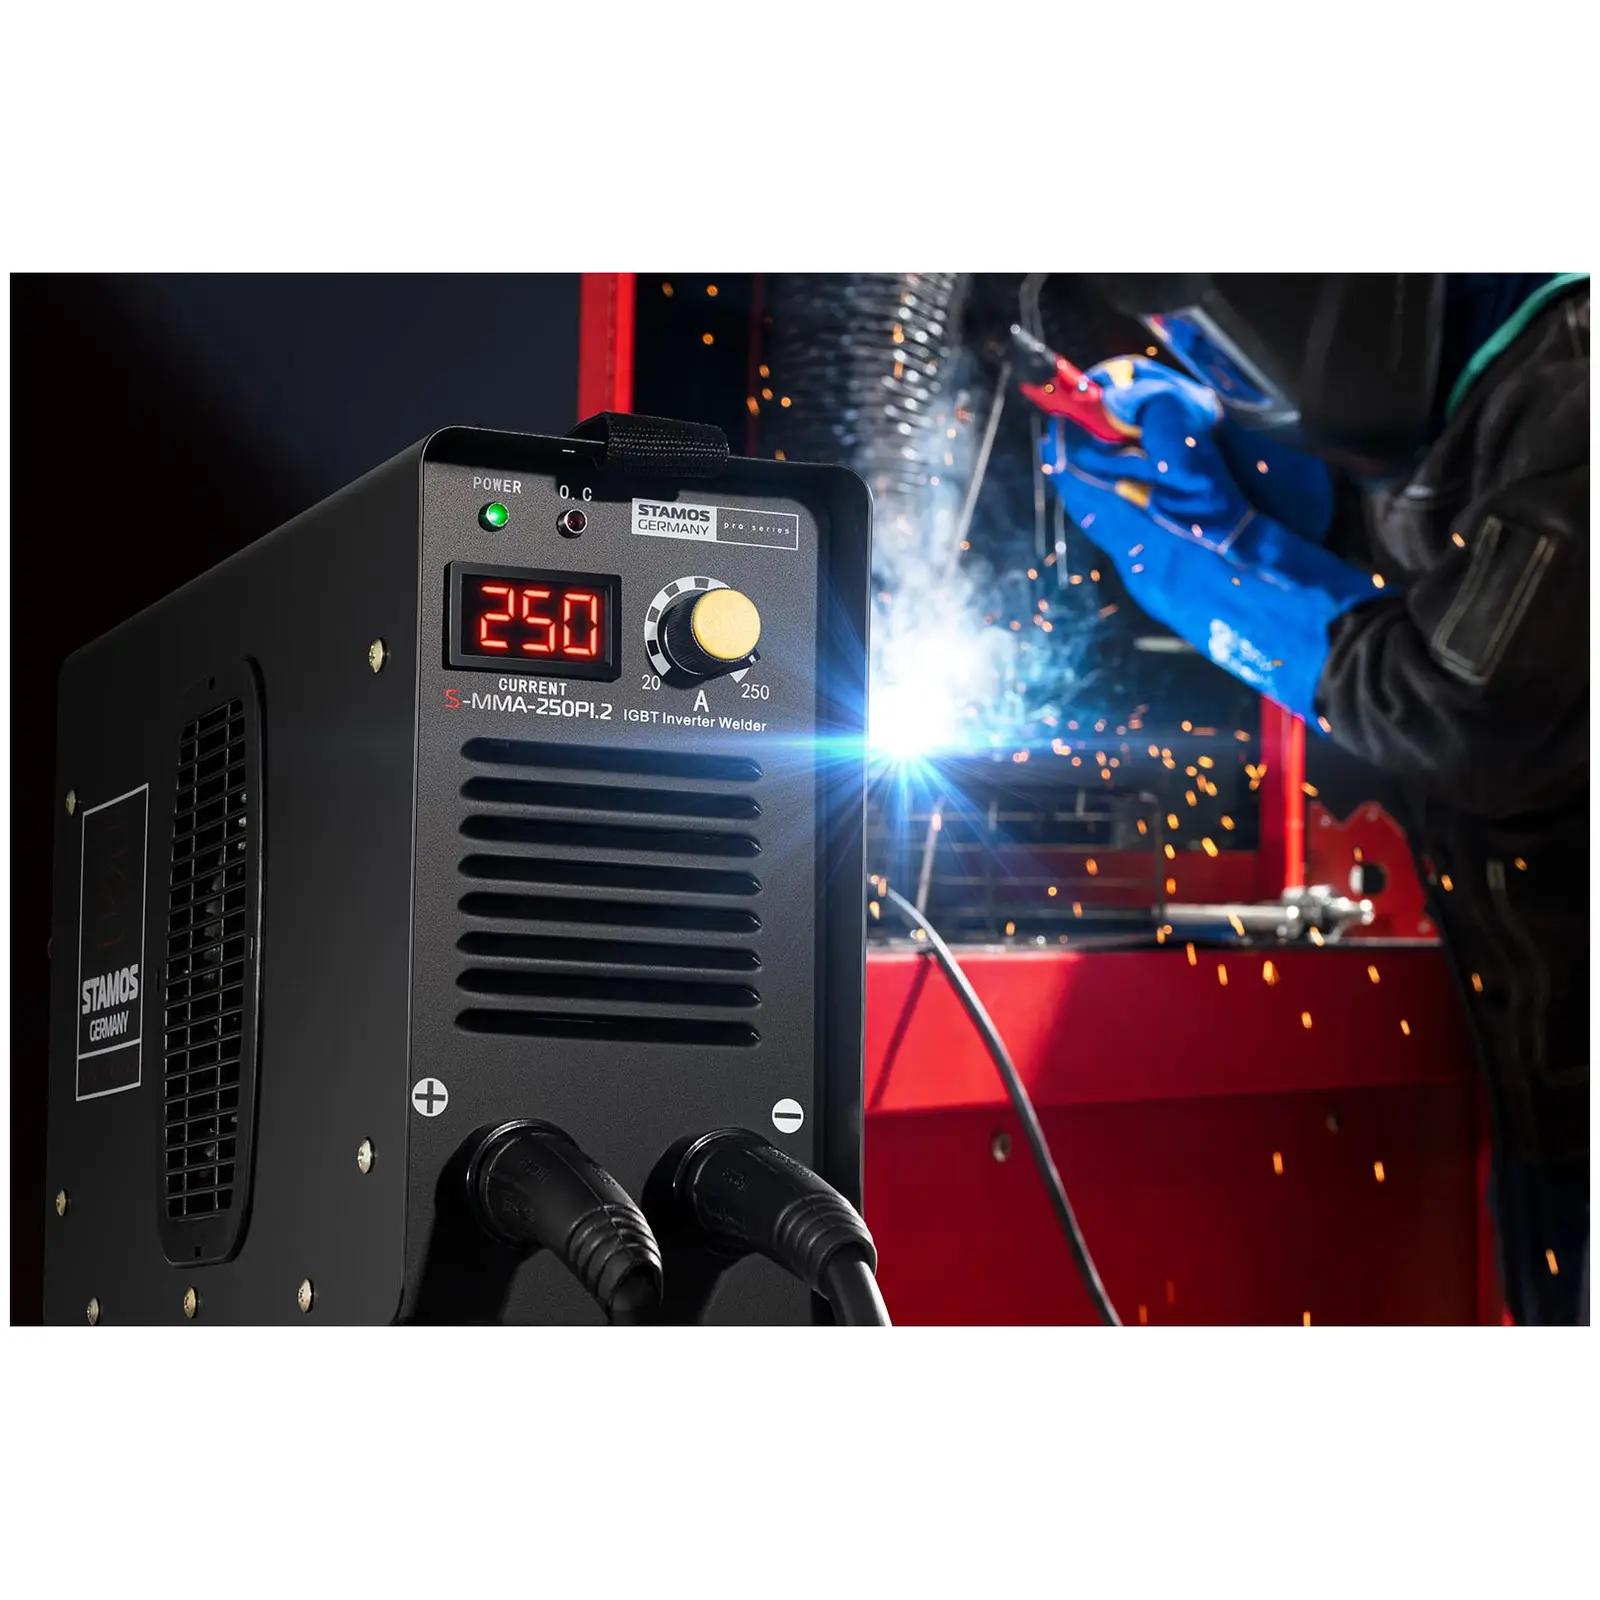 Equipo de soldadura por electrodo MMA - 250 A - cables de 8 m - Hot Start - PRO